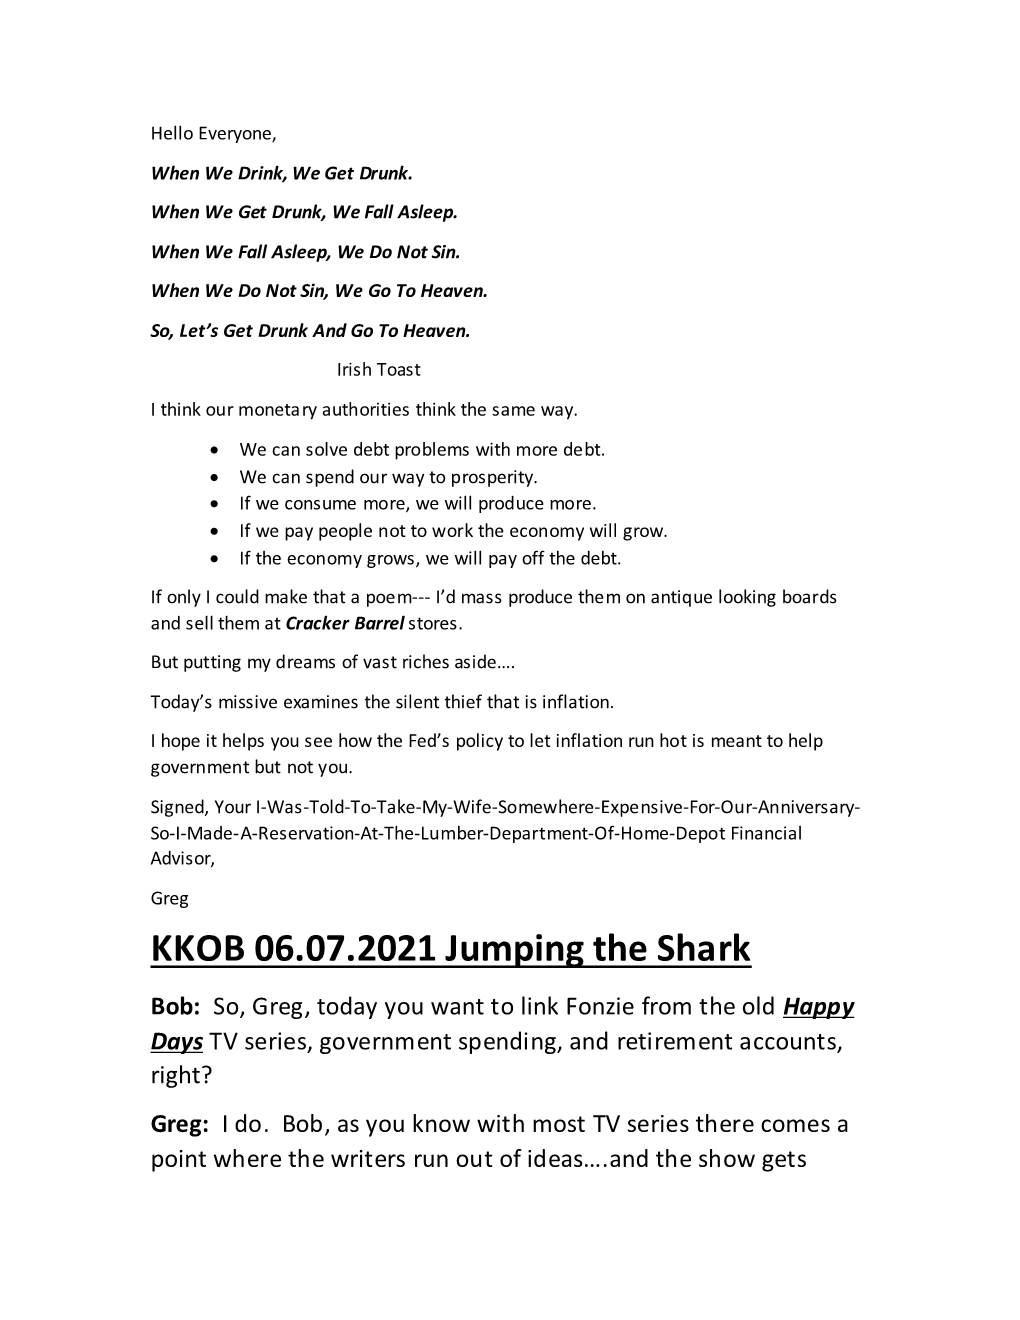 KKOB 06.07.2021 Jumping the Shark